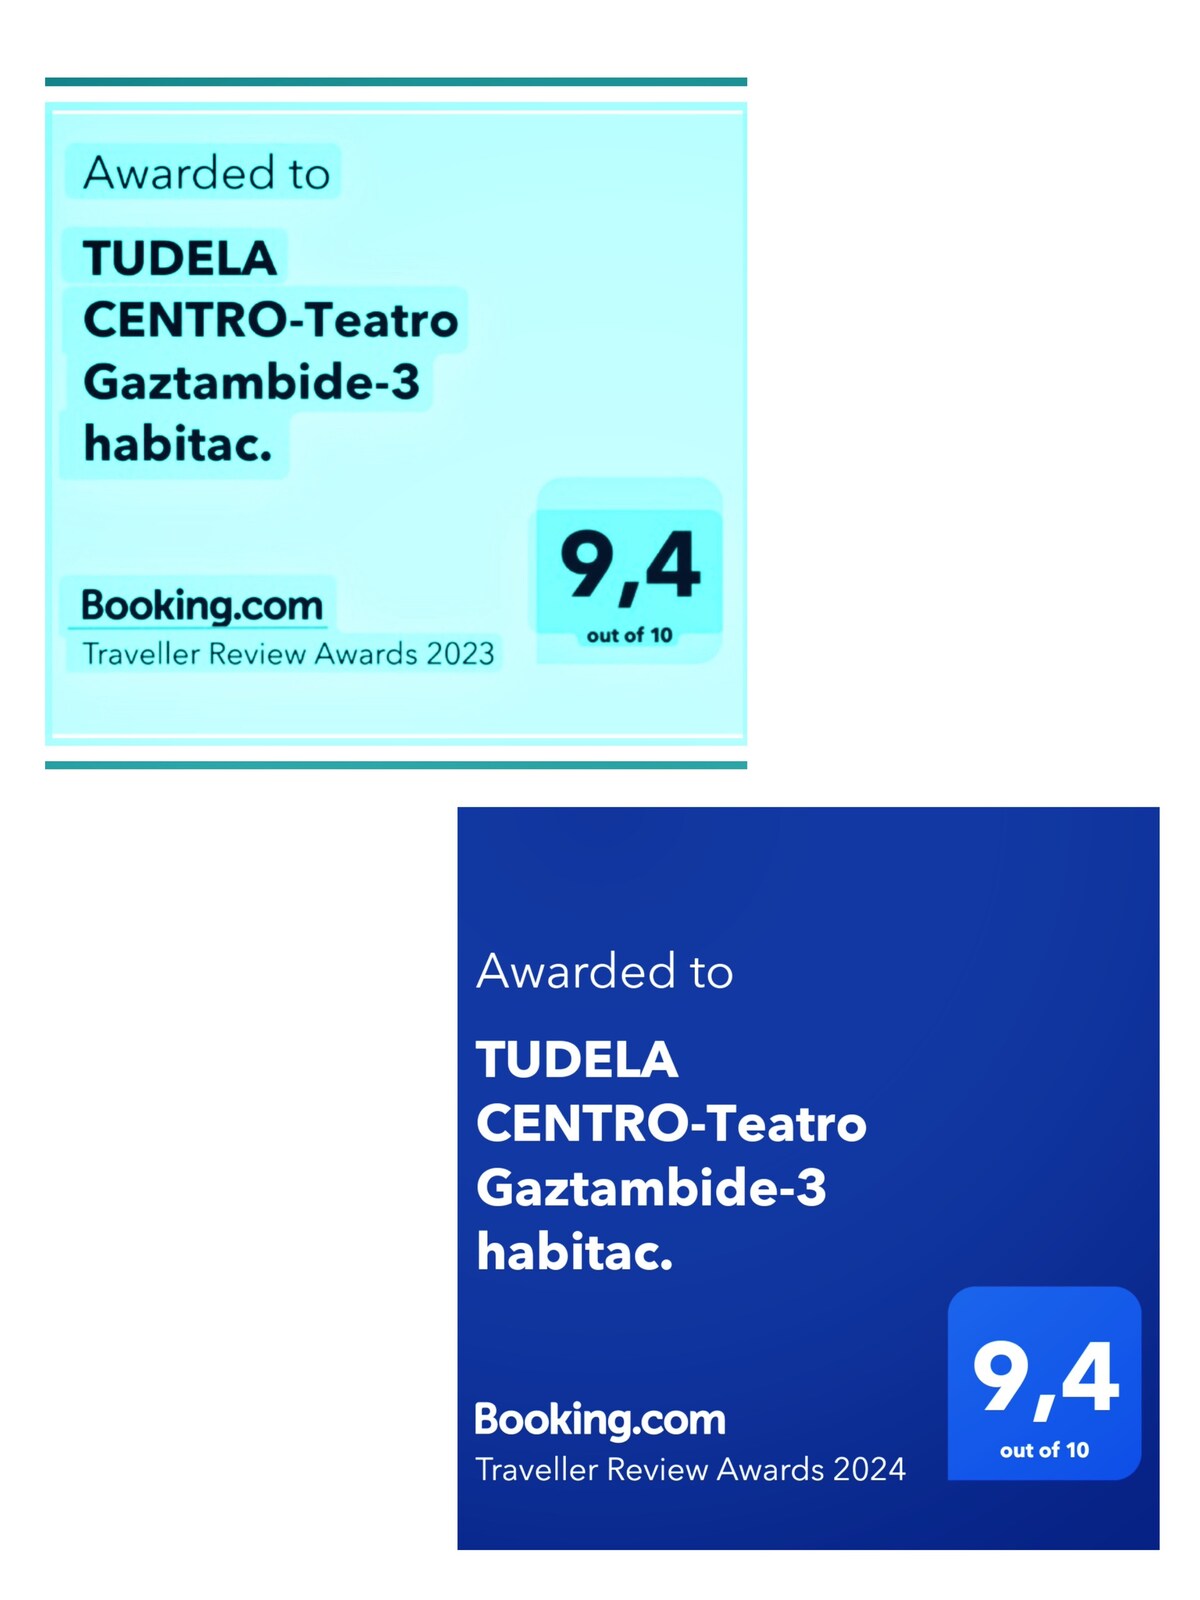 TUDELA CENTRO-Teatro Gaztambide-3 habitac.